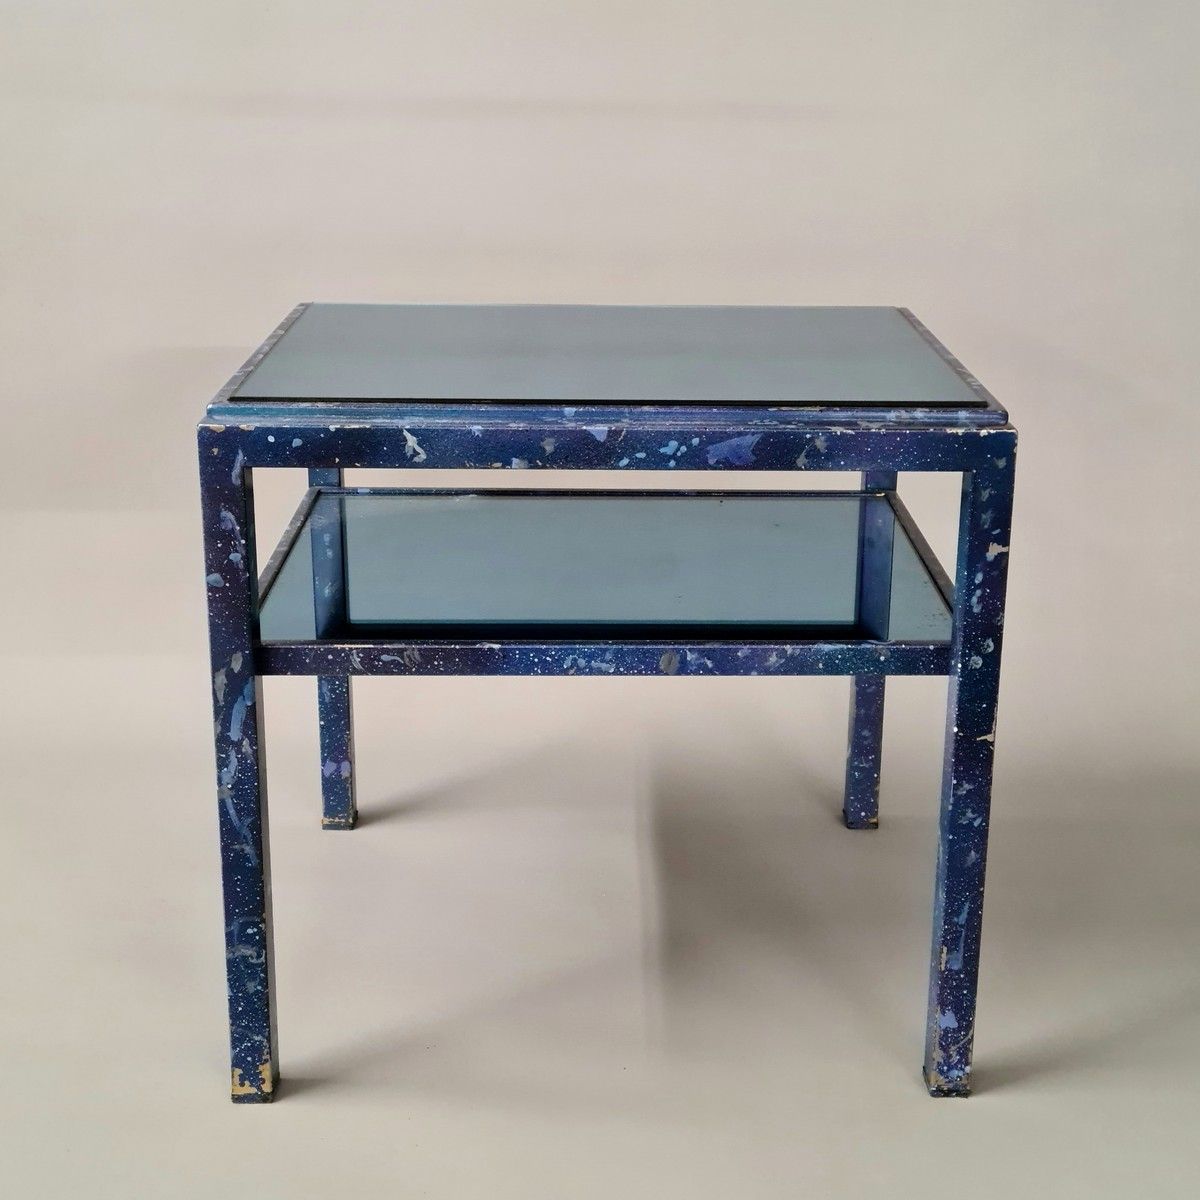 Null JOY DE ROHAN CHABOT (生于1942年)的桌子，带椅子，喷漆铝。

44 x 46 x 39 厘米

出处：Caroline Pig&hellip;